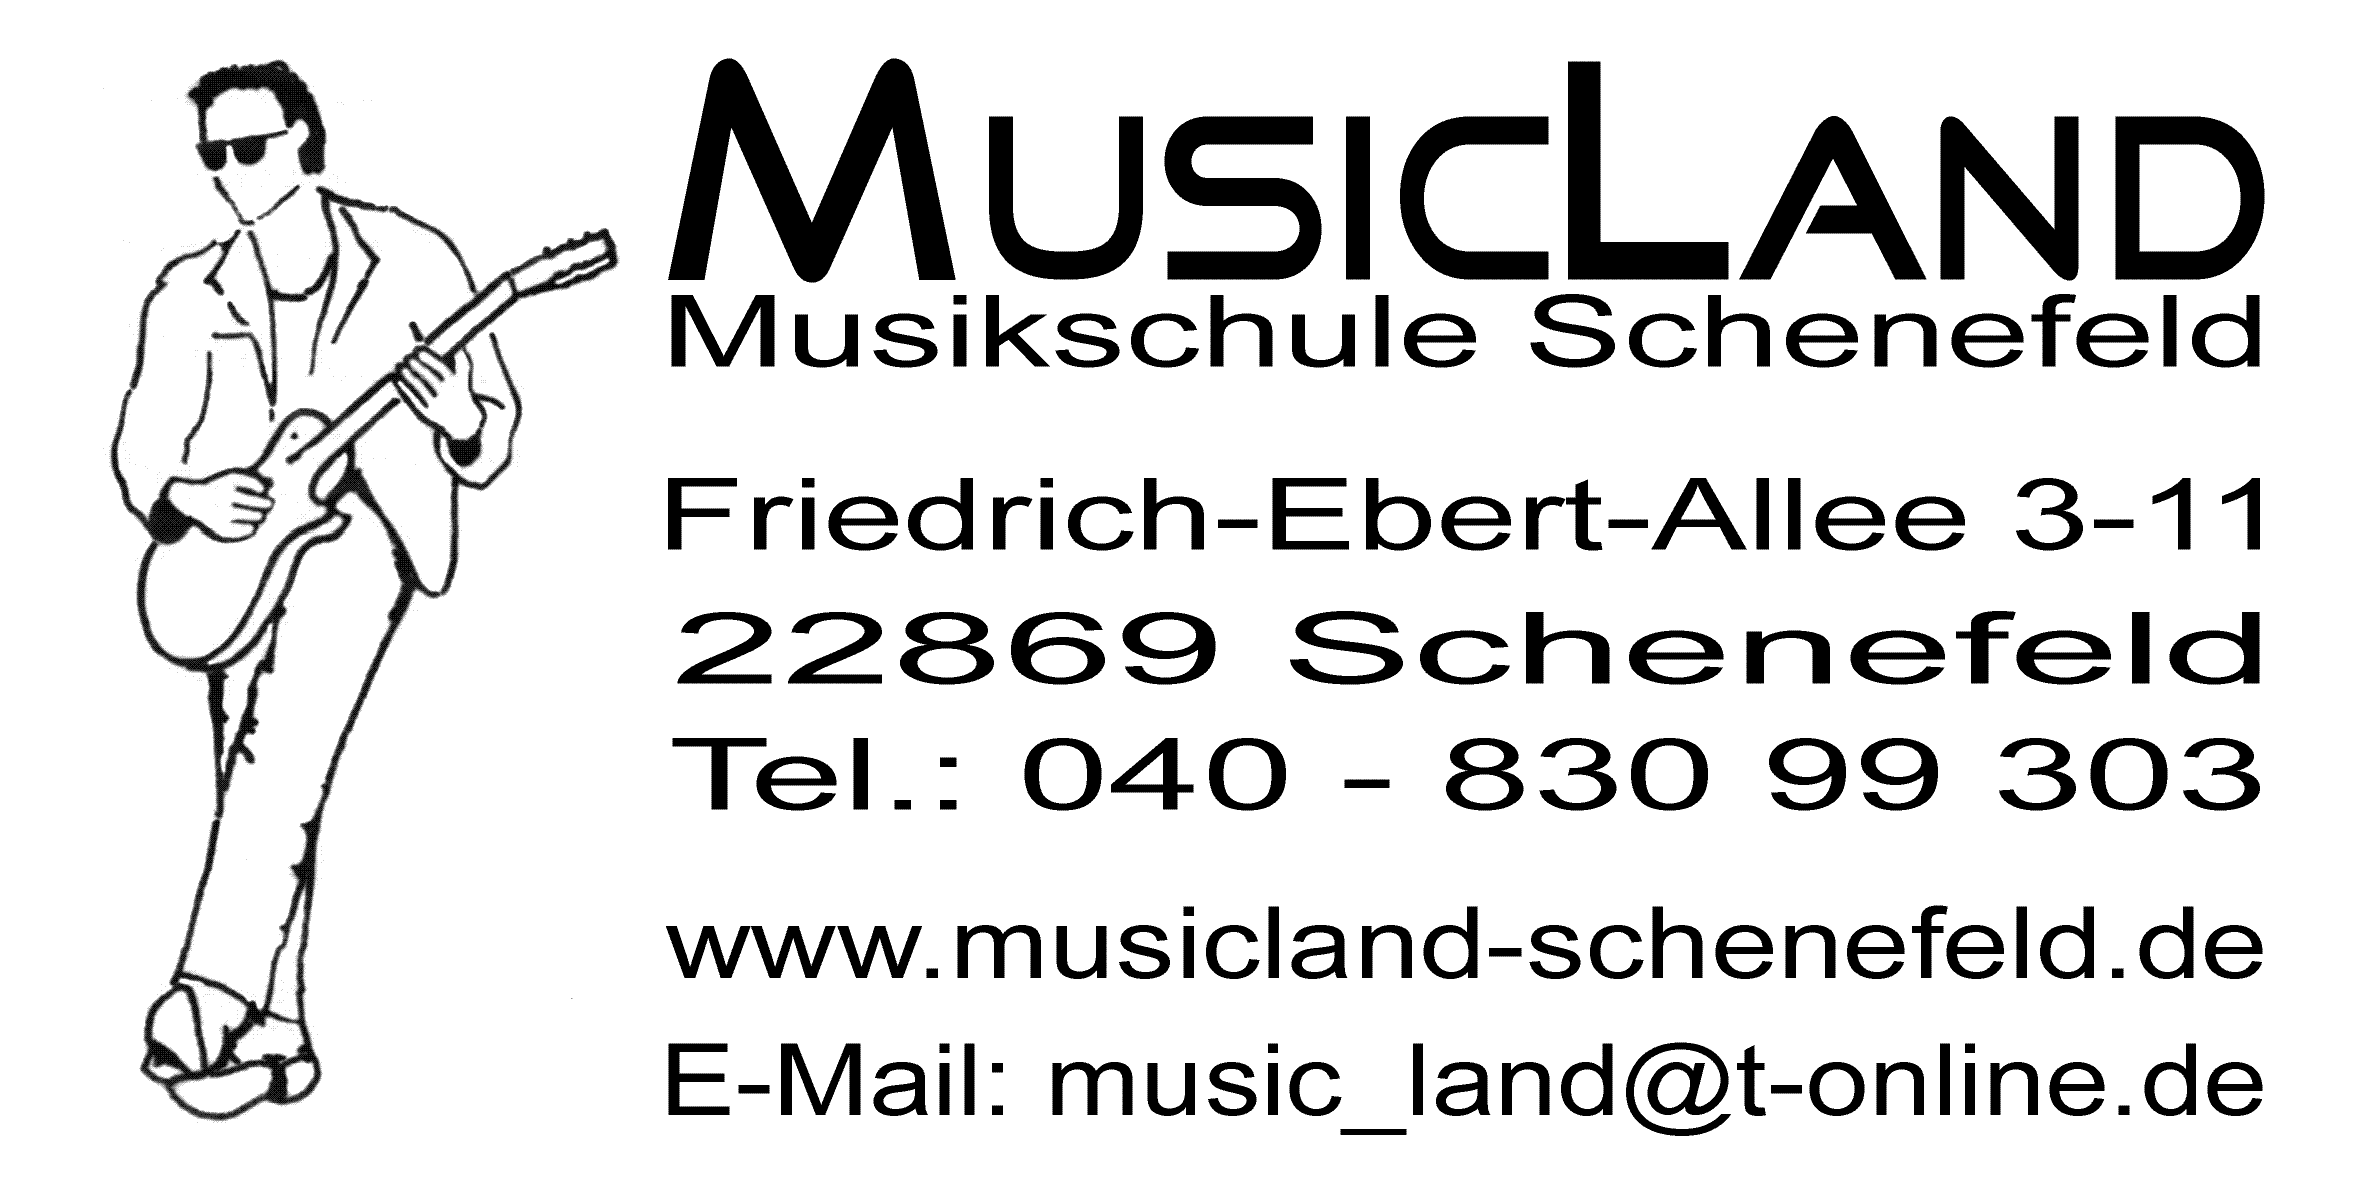 MUSICLAND - Musikschule Schenefeld